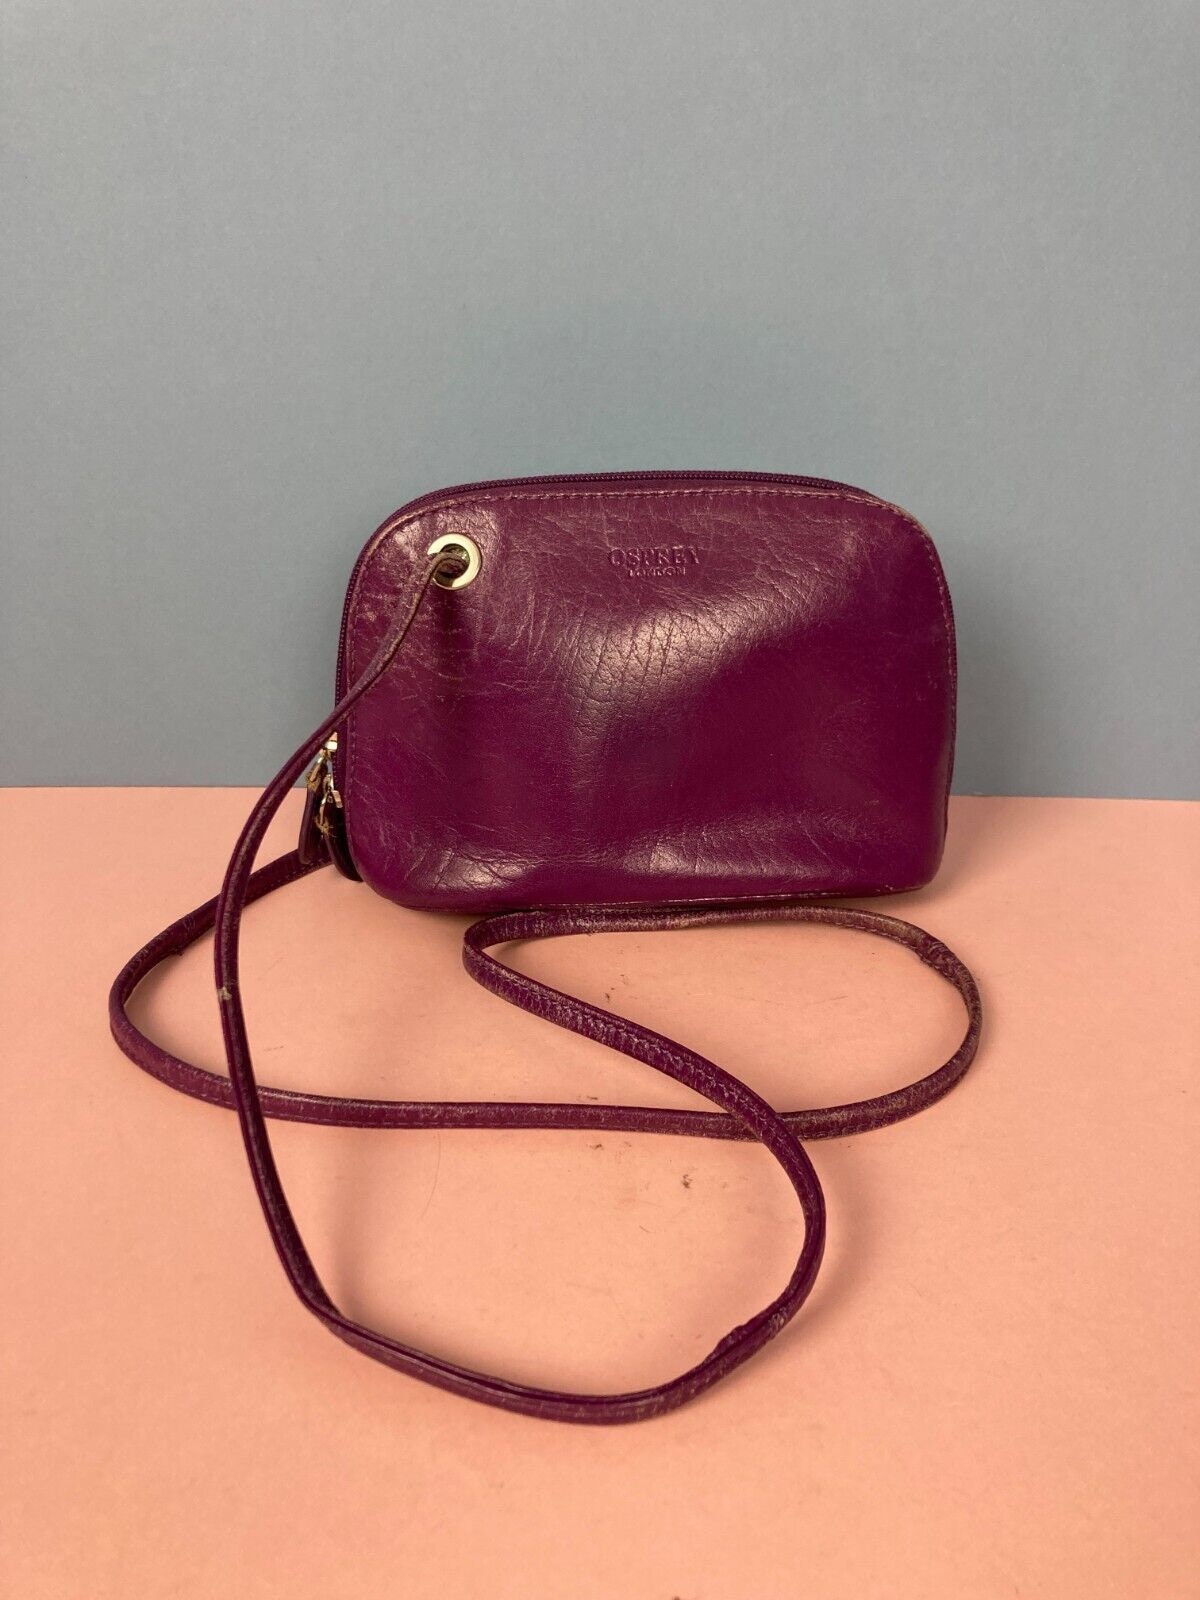 Osprey Red leather handbag | eBay